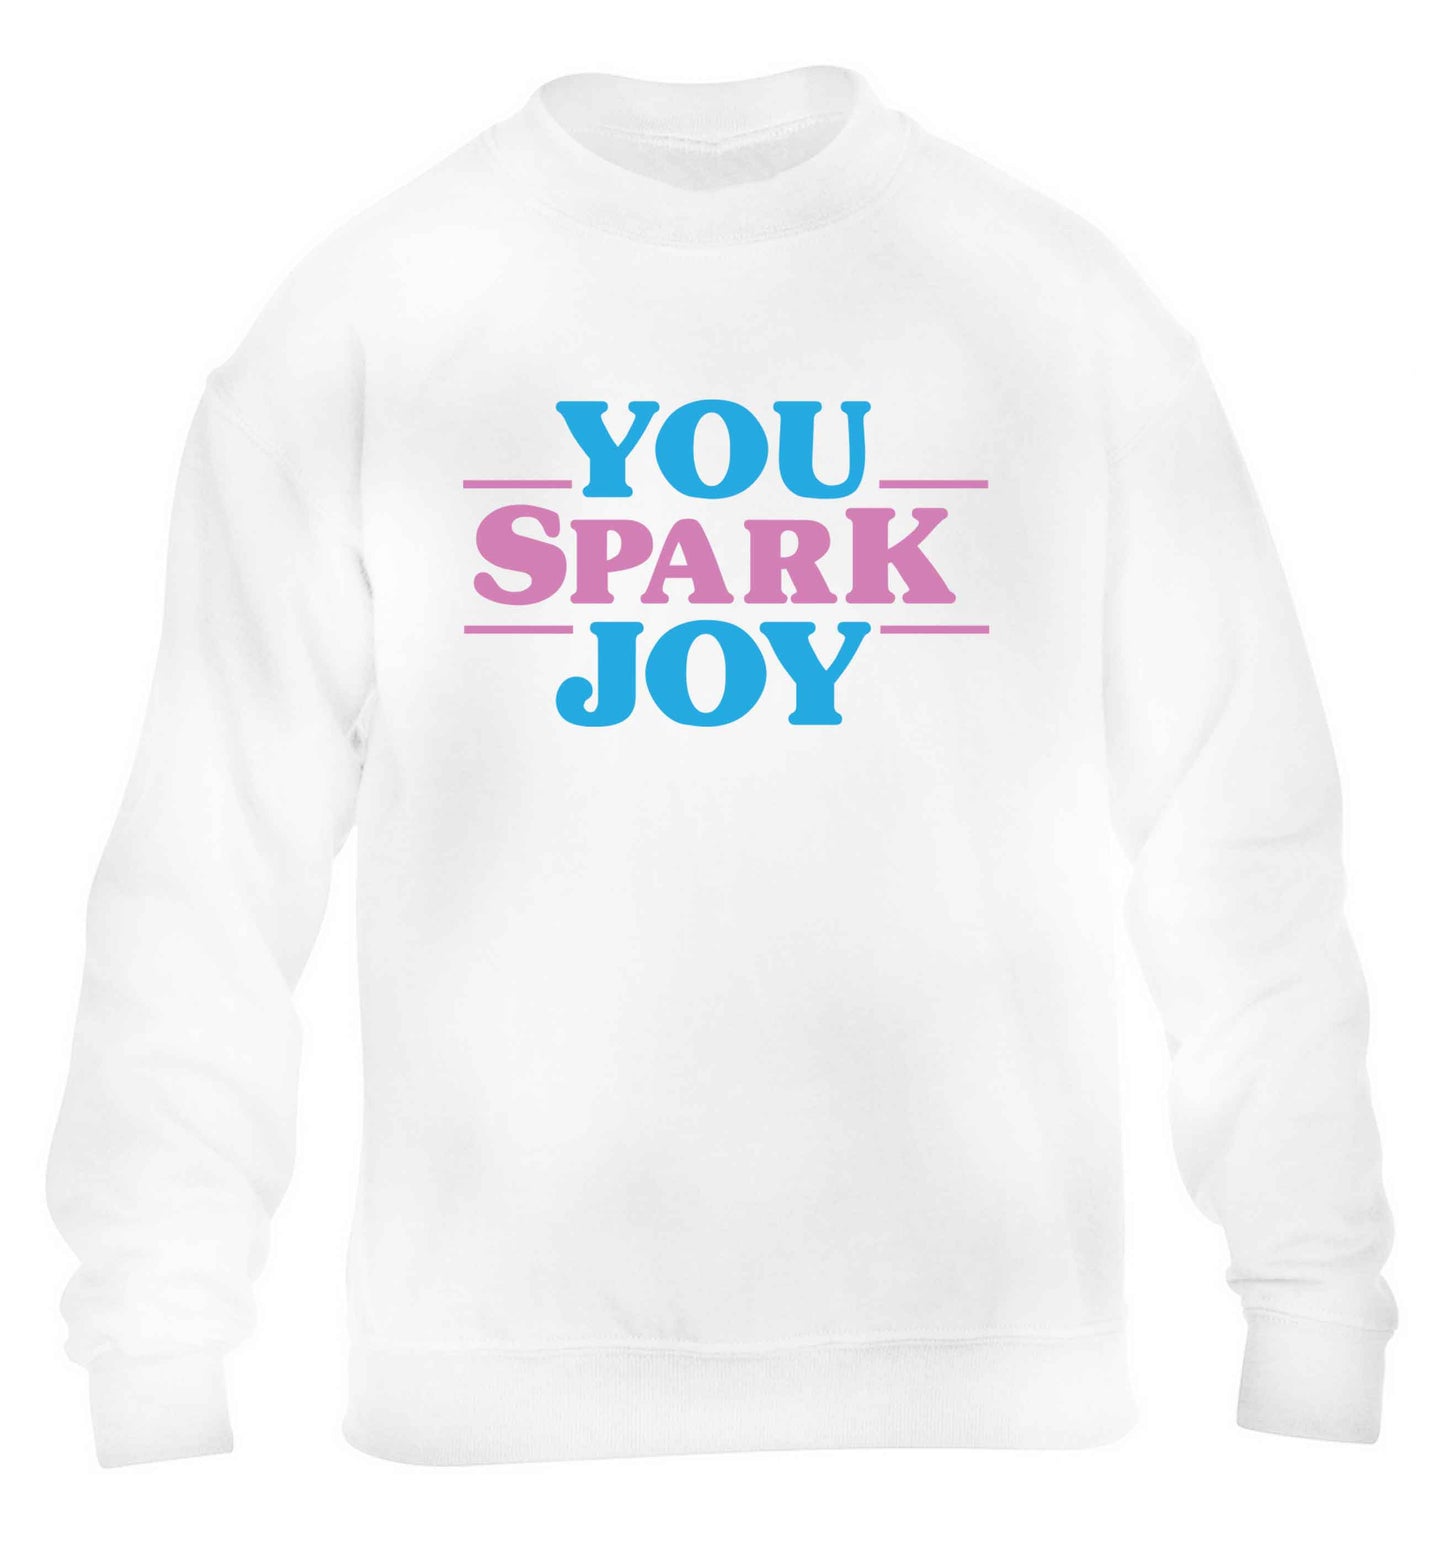 You spark joy children's white sweater 12-13 Years